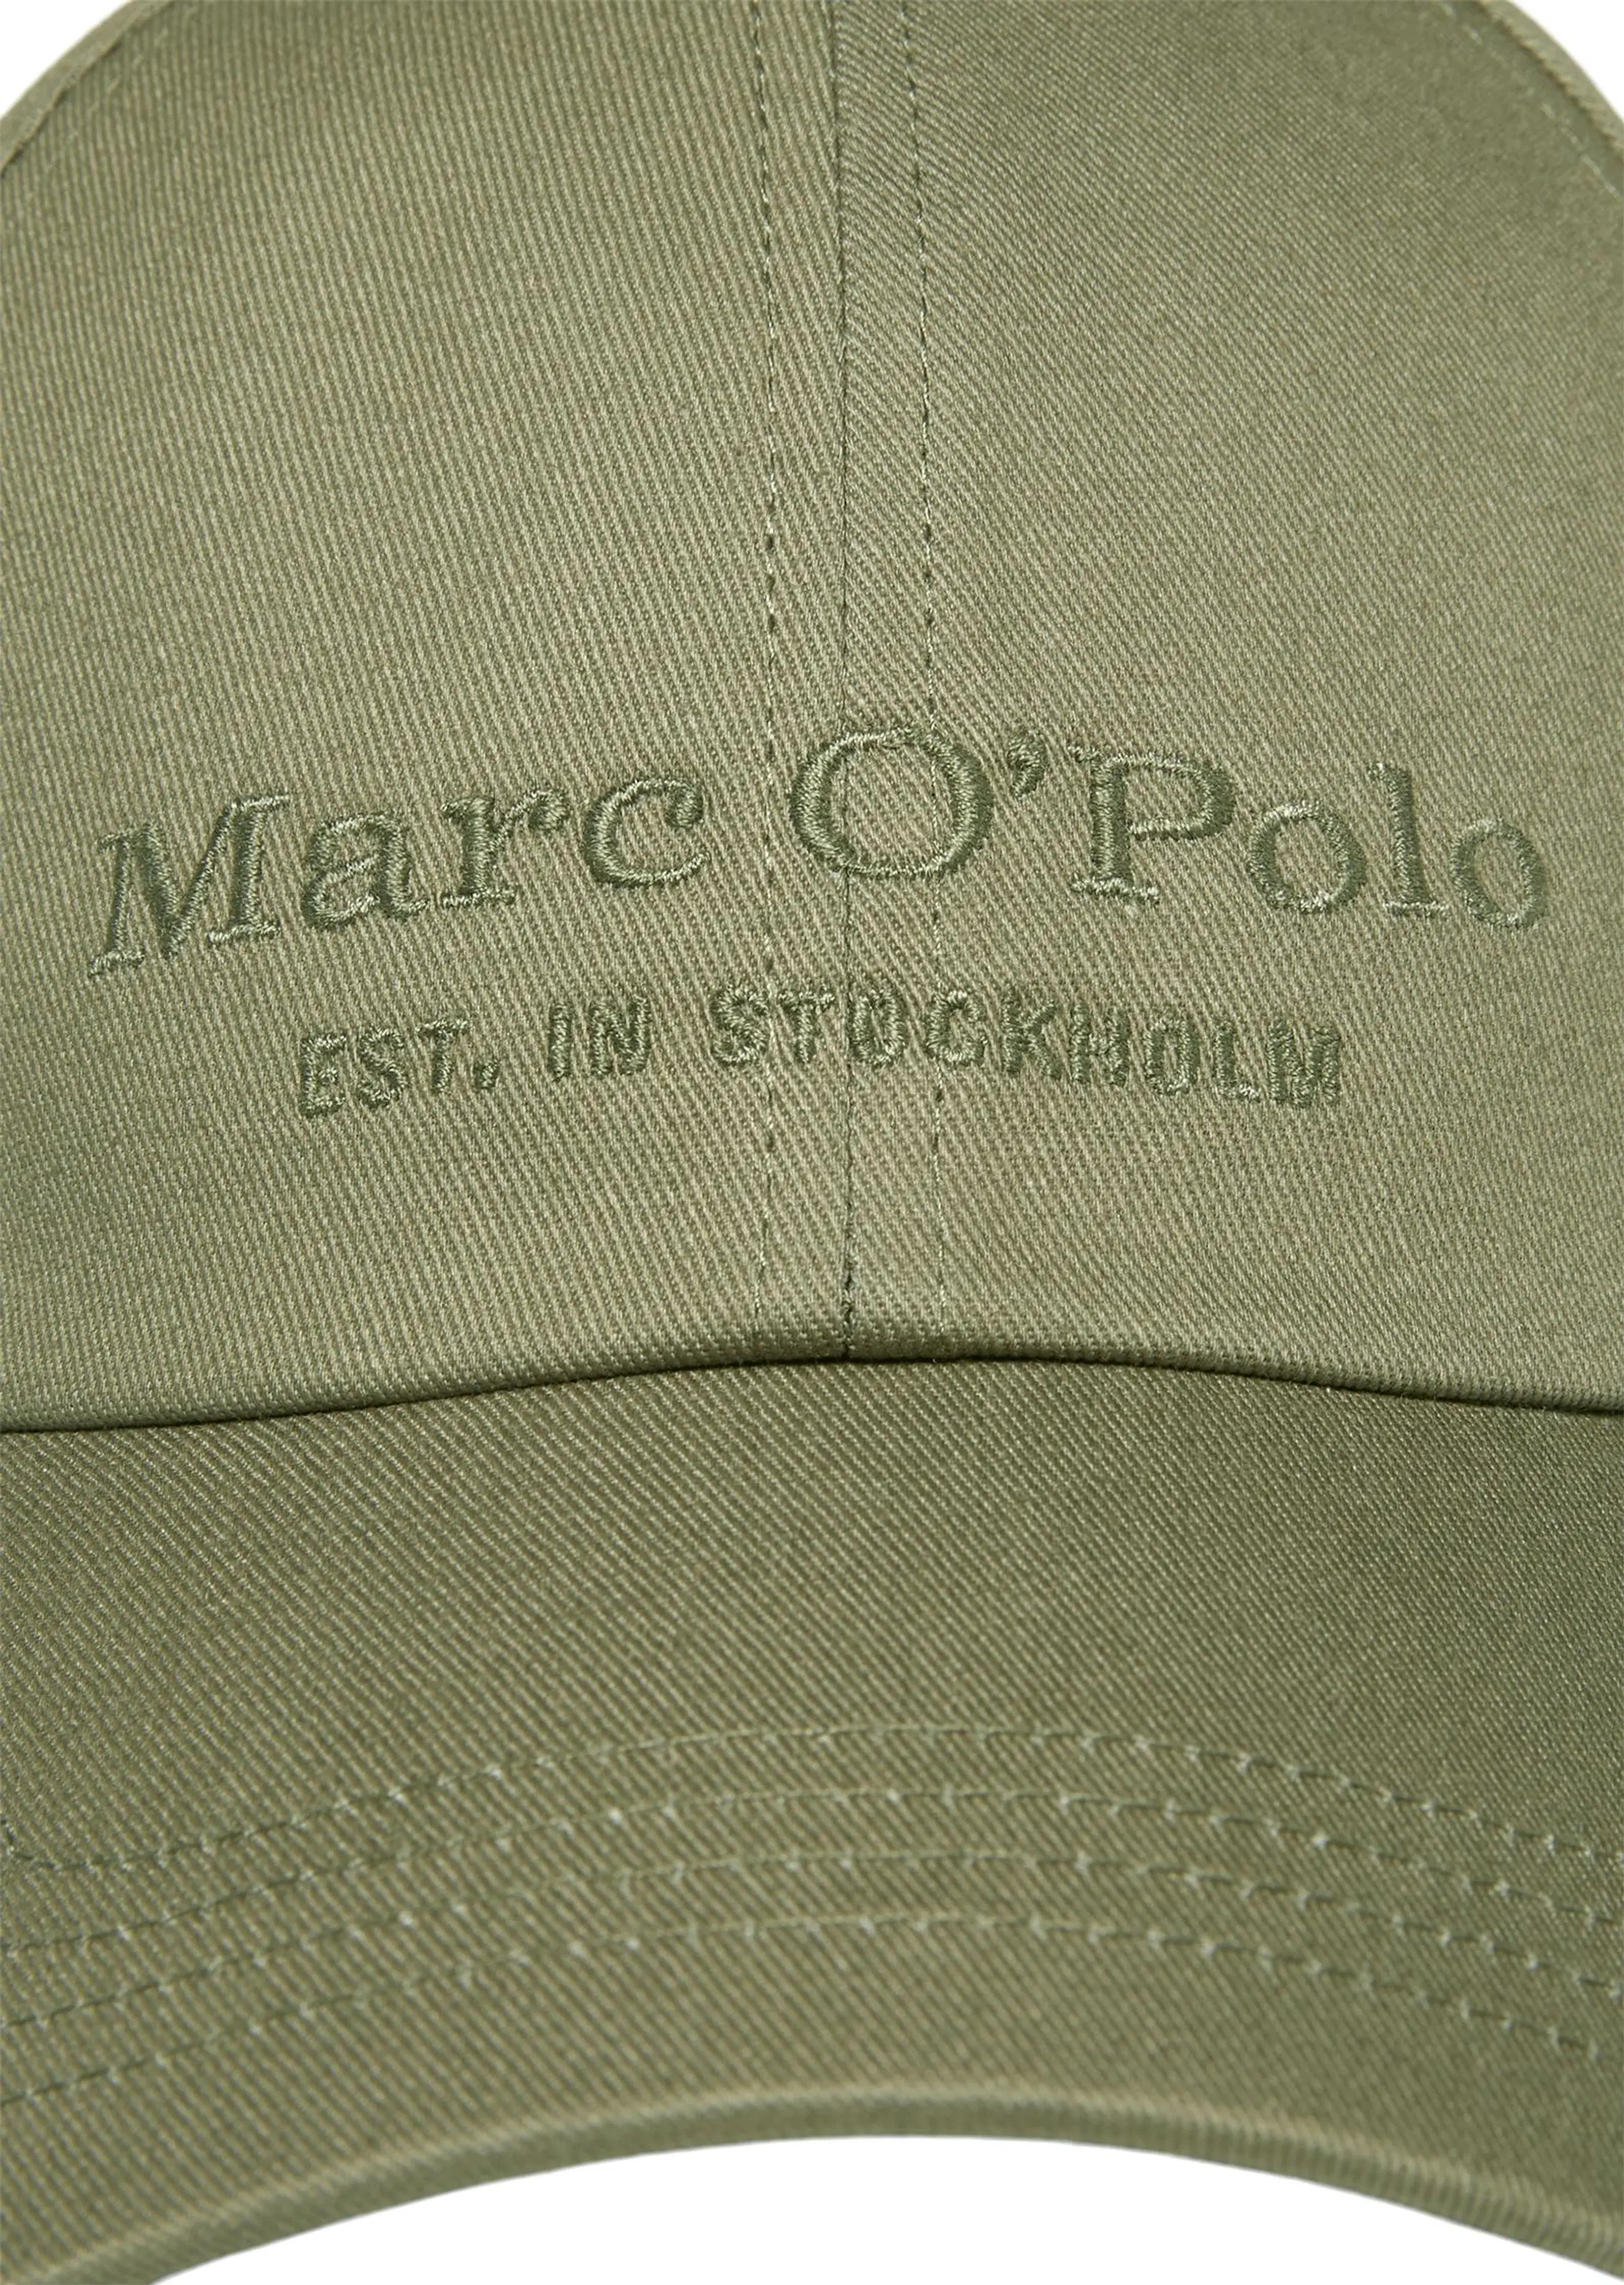 Marc O'Polo lippalakki